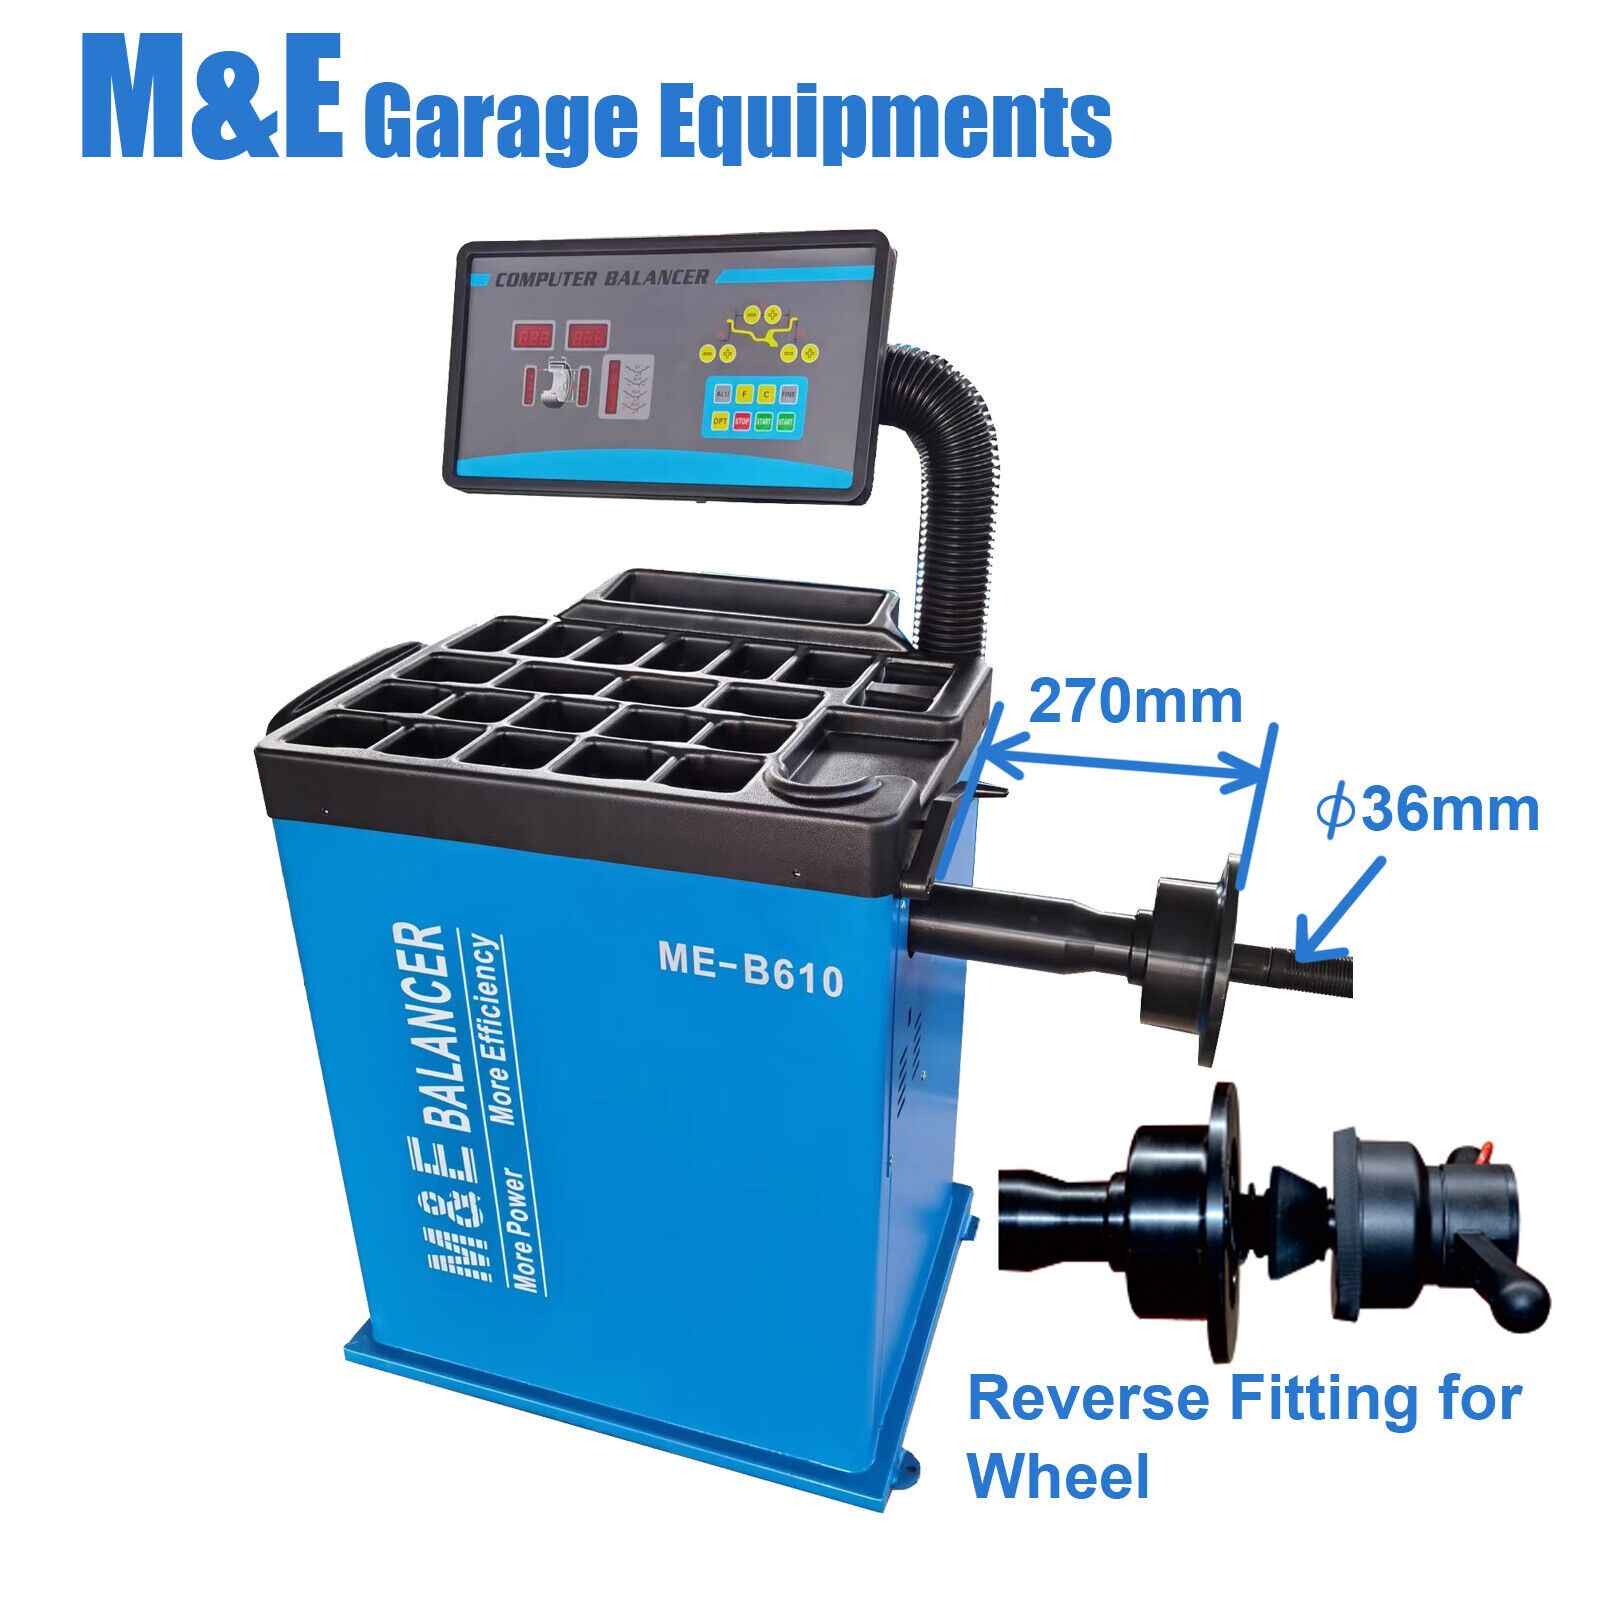 Tire Changer Machine ME-T550 + Wheel Balancer ME-B610 Garage Equipment